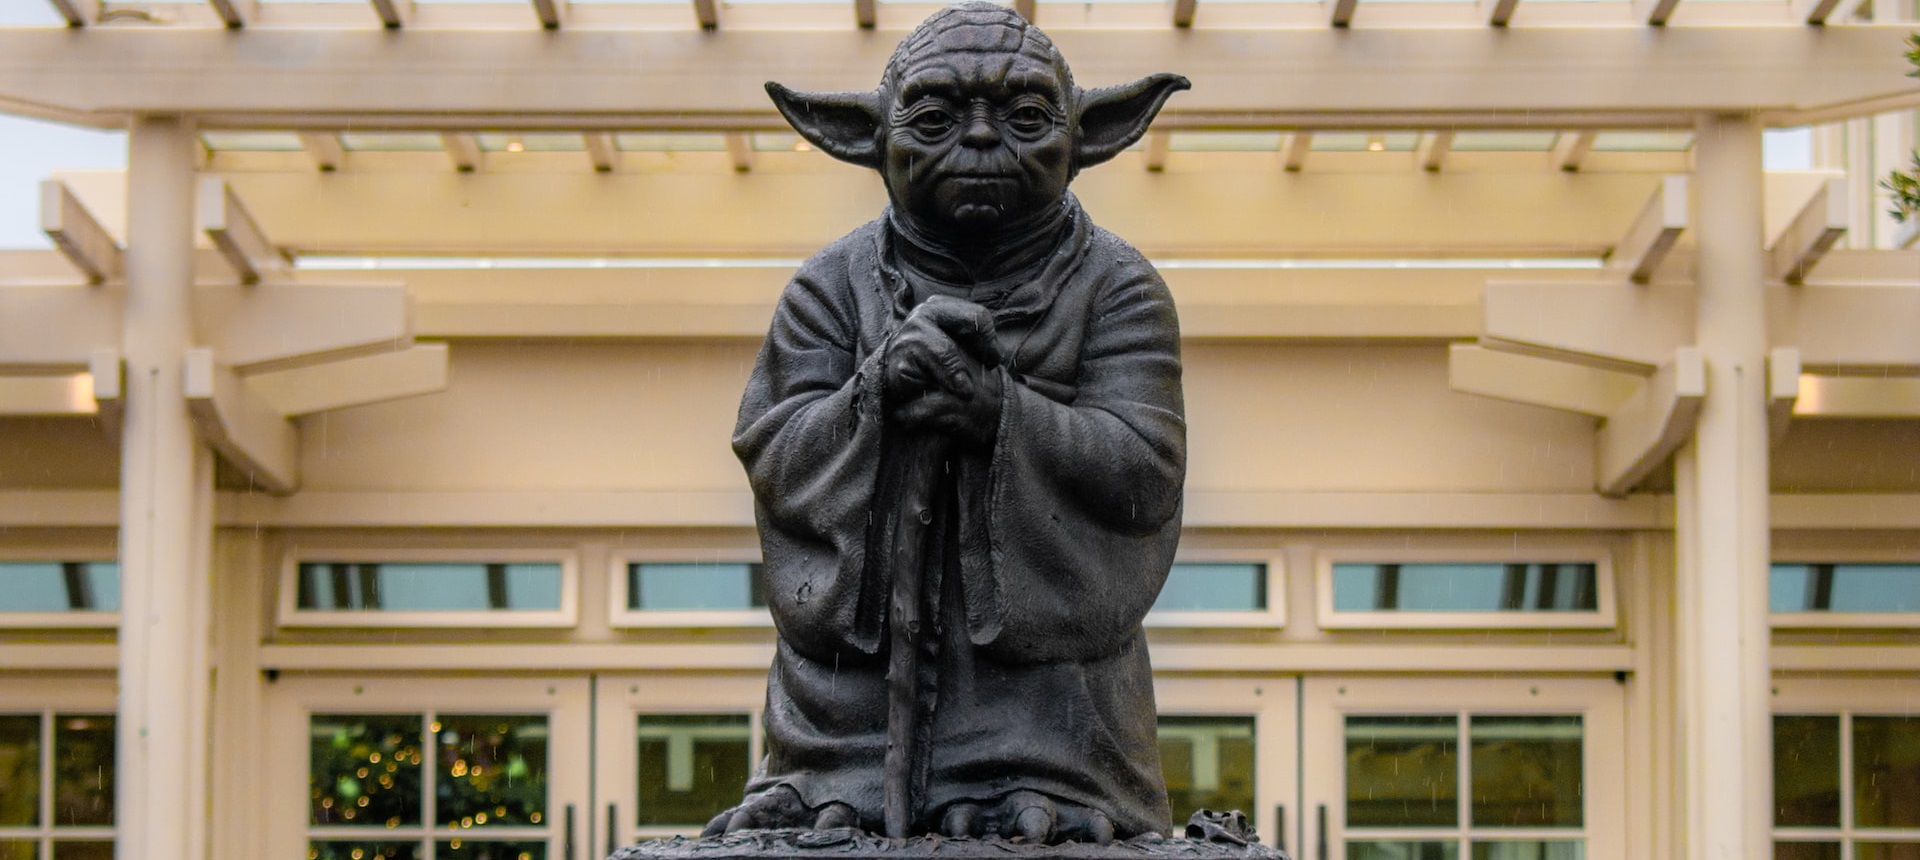 Image of Yoda Fountain in San Francisco